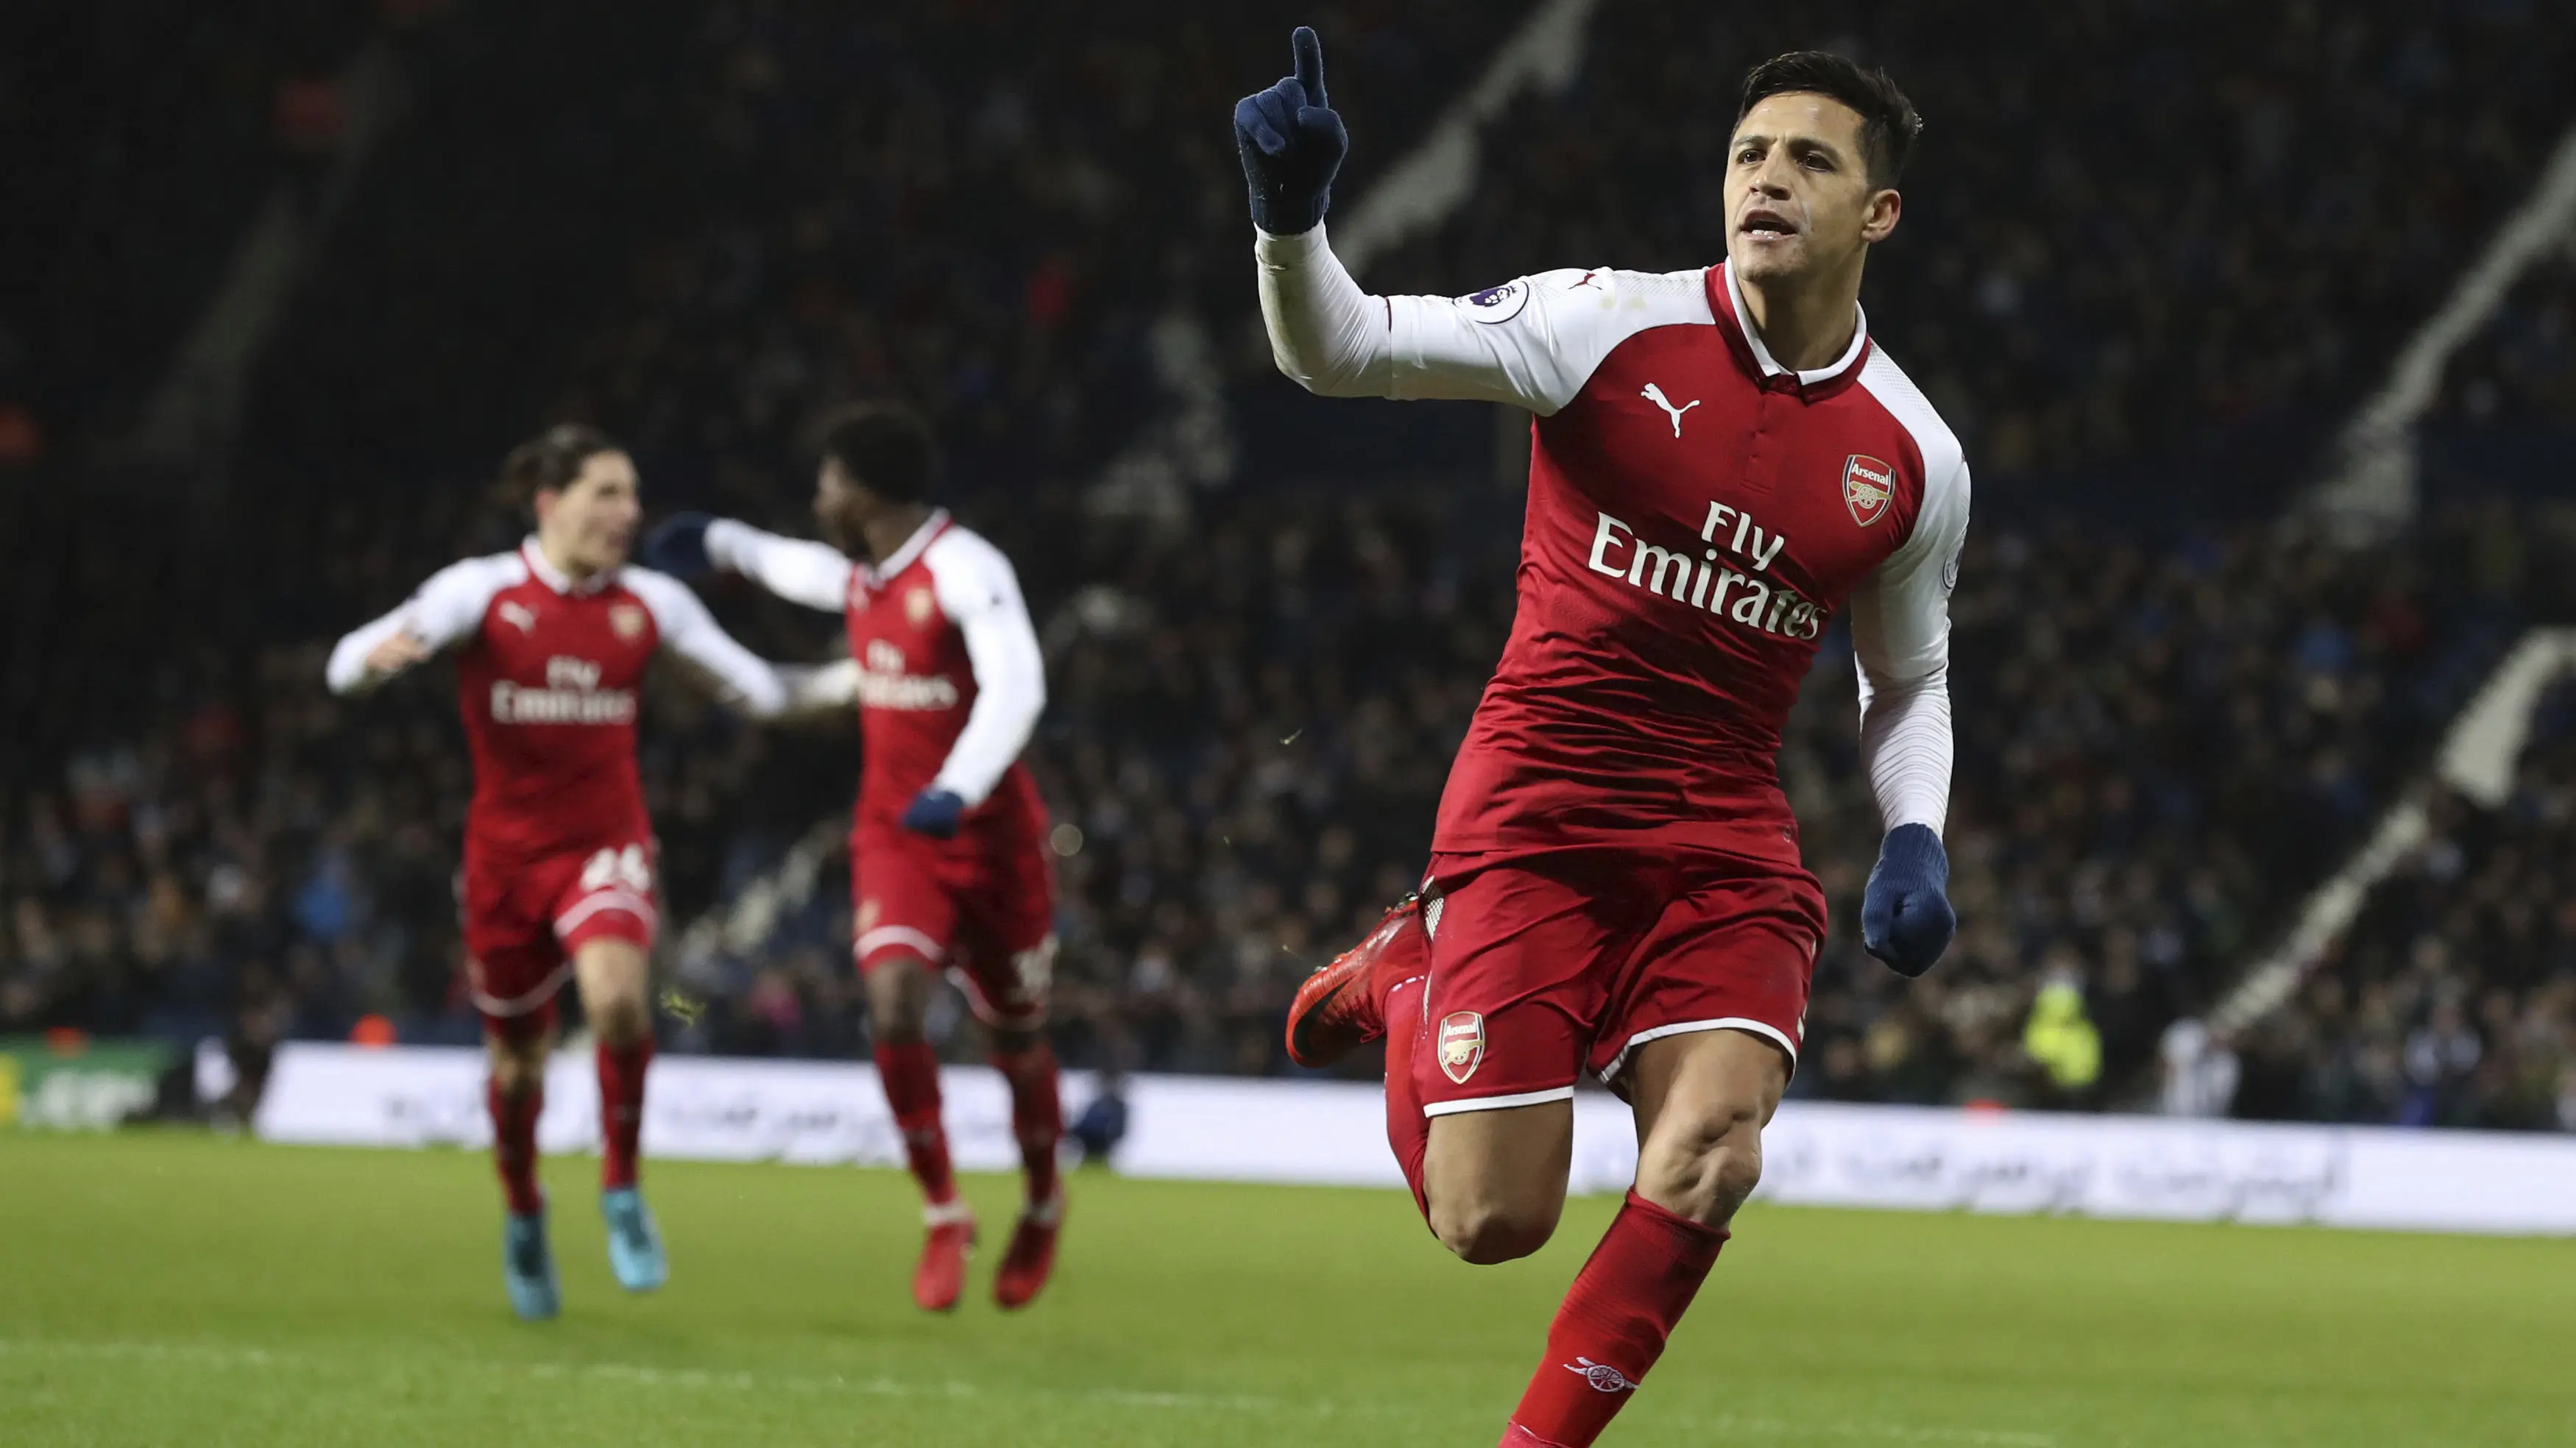 Pemain Arsenal Alexis Sanchez sangat diminati Manchester City. (Martin Rickett/PA via AP)